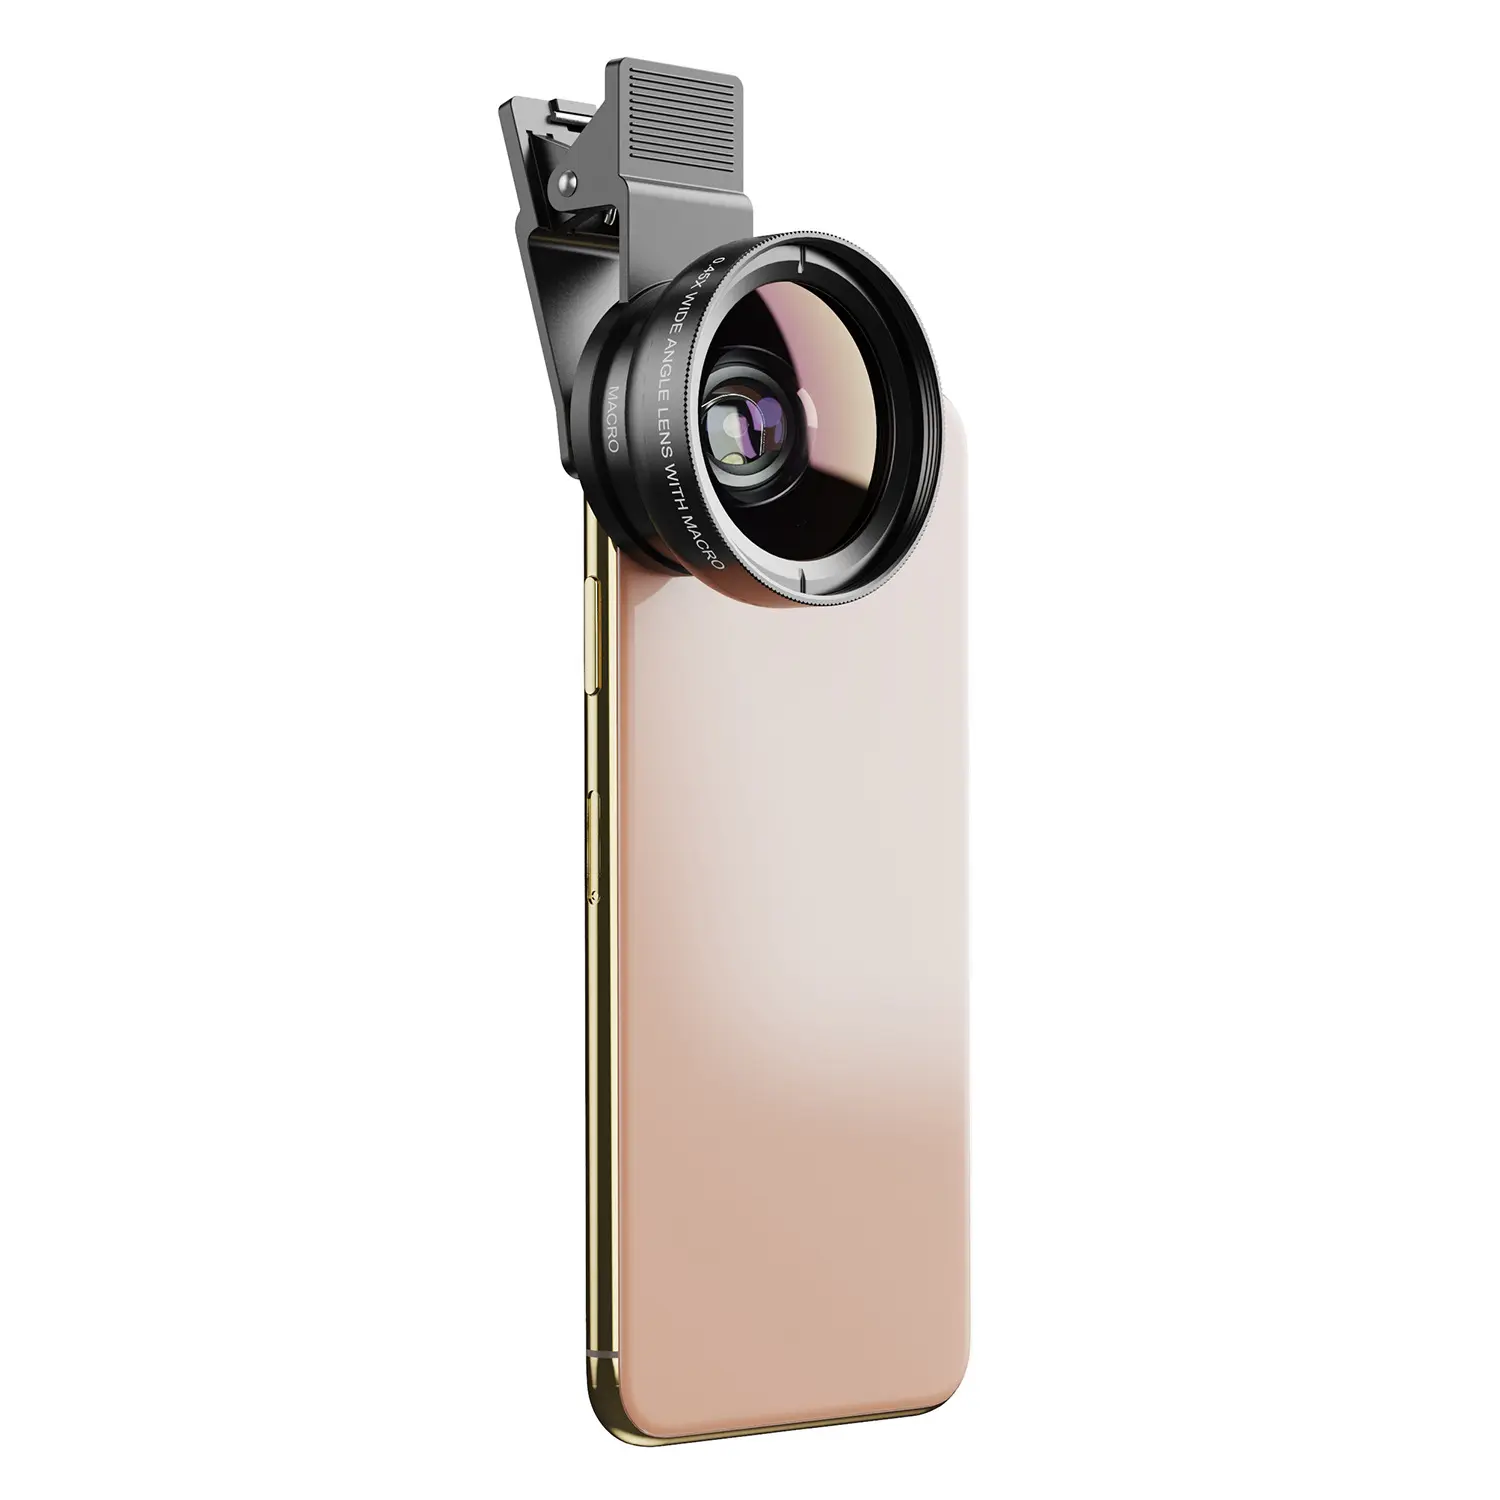 Apexel New Hd 37mm 0.45x超広角レンズ、12.5xスーパーマクロレンズ、iPhone用Samsungスマートフォンカメラ付き携帯電話レンズキット